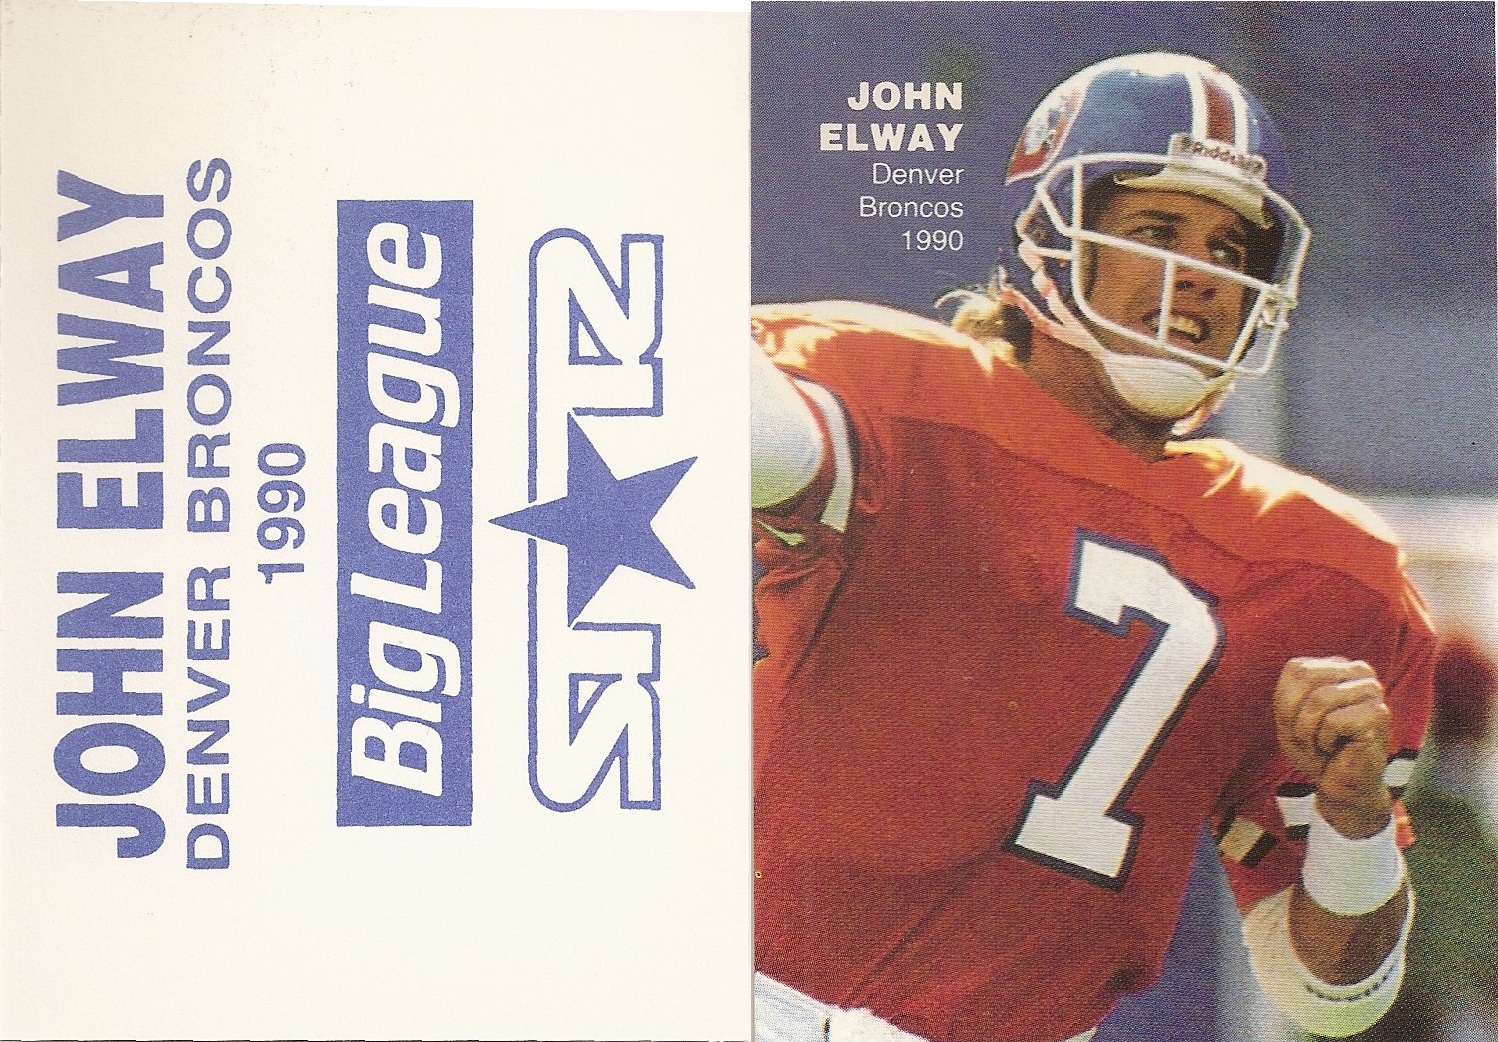 1997 John Elway Denver Broncos Starting Lineup mint in pkg w/ football card 